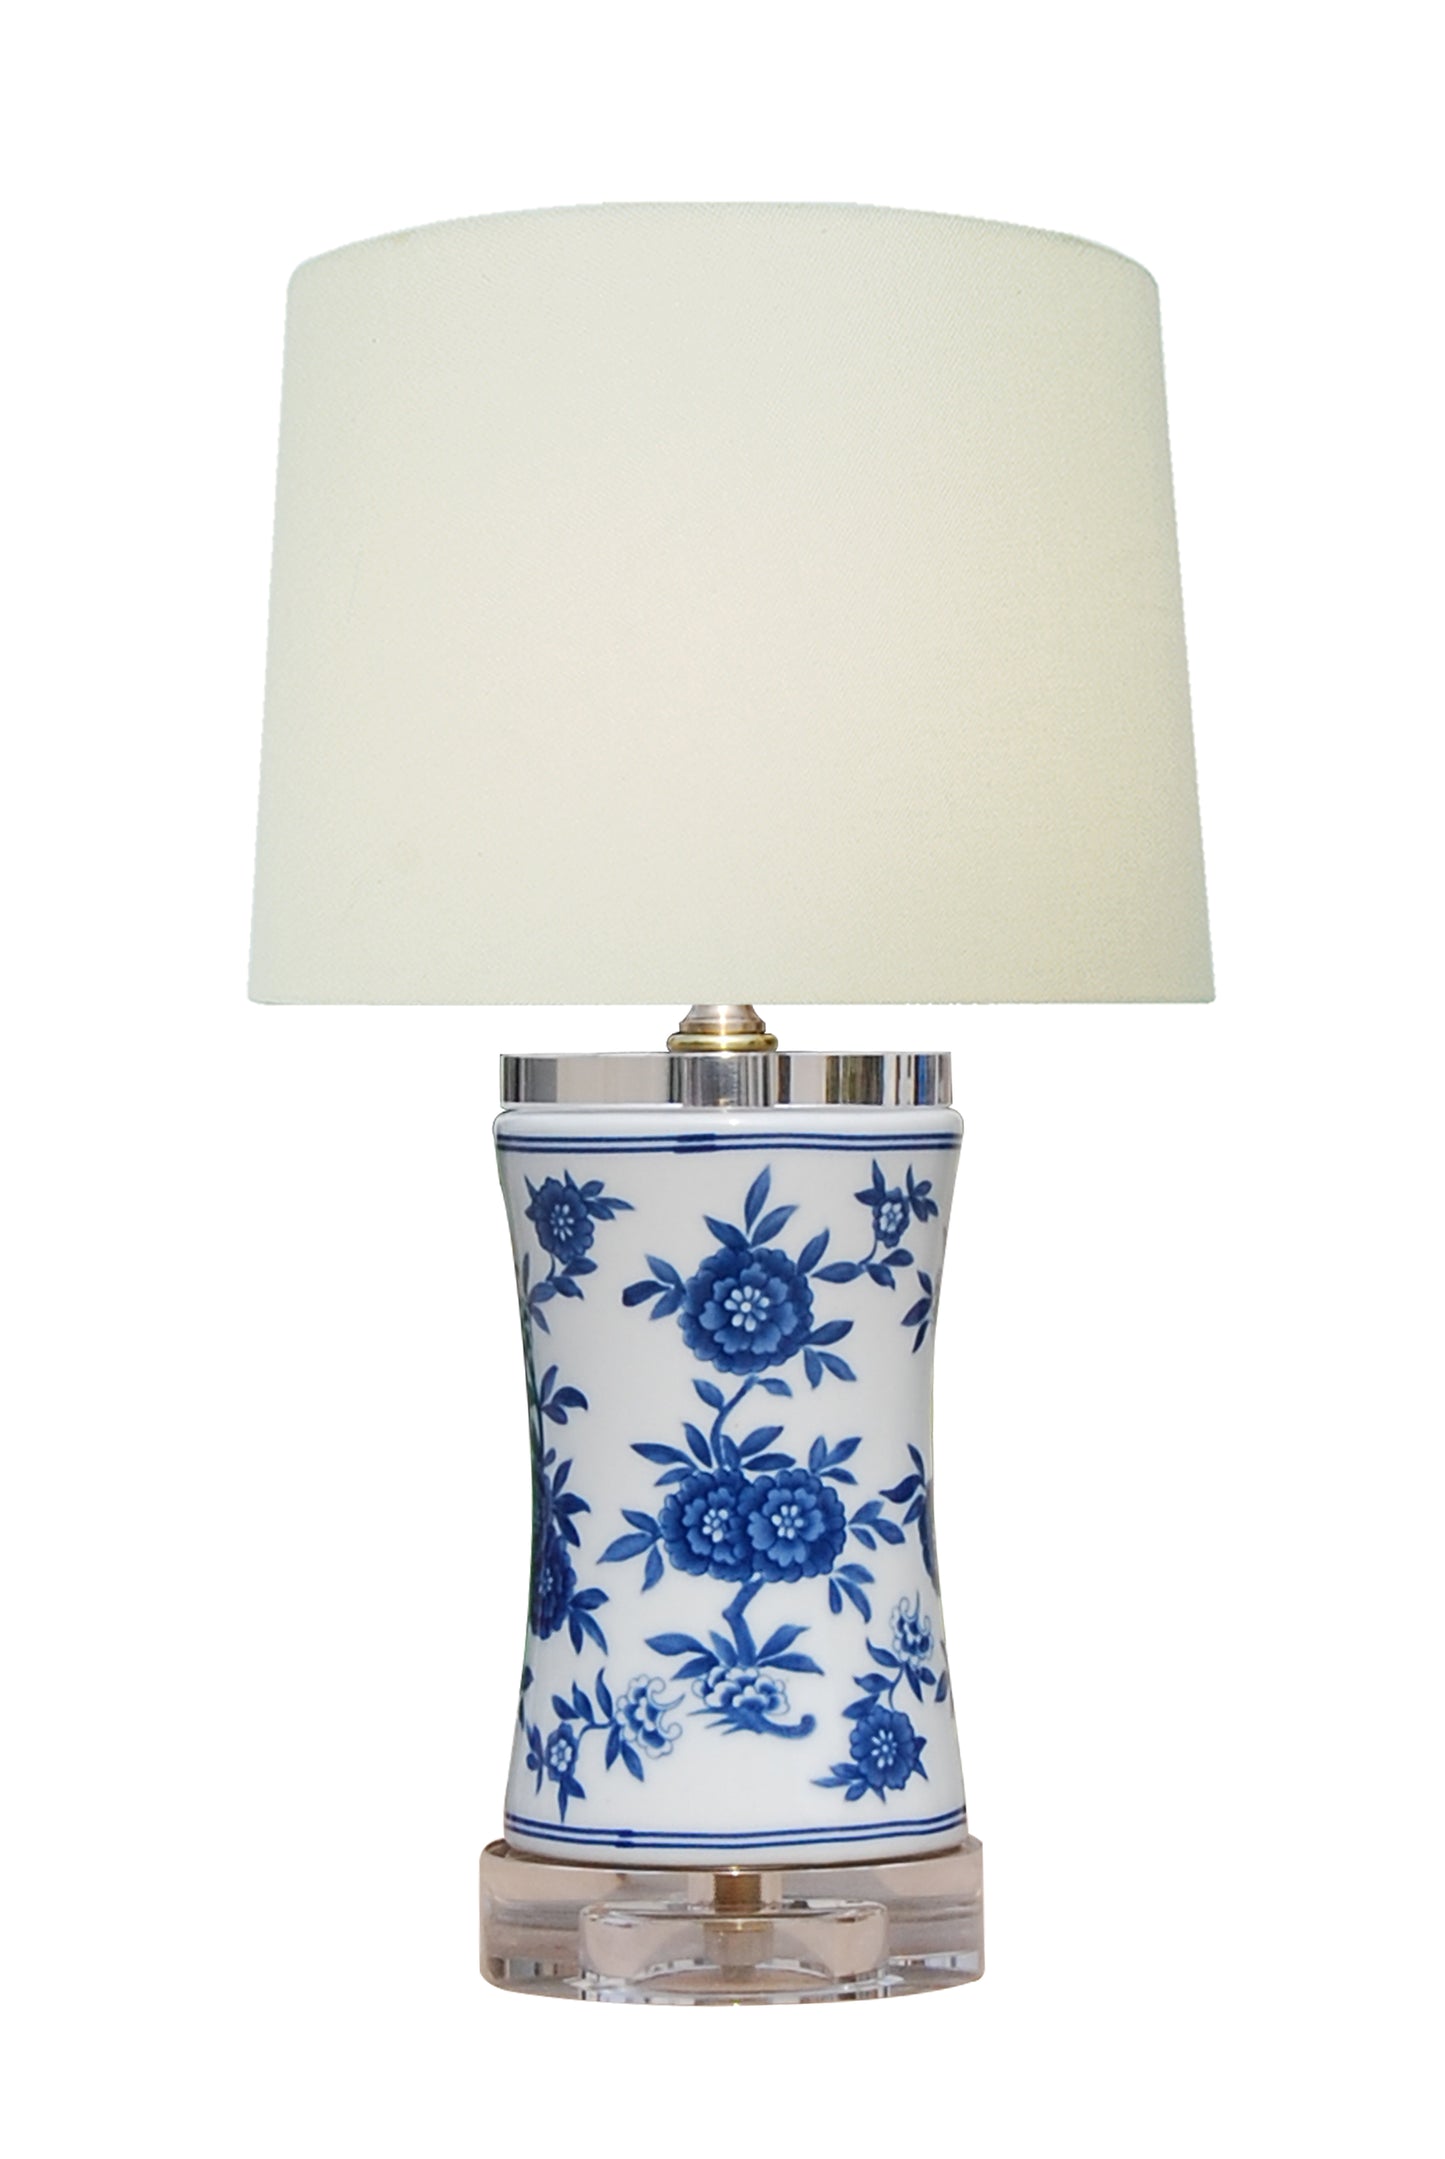 Blue and white Mini Floral Vase Lamp 14.5"